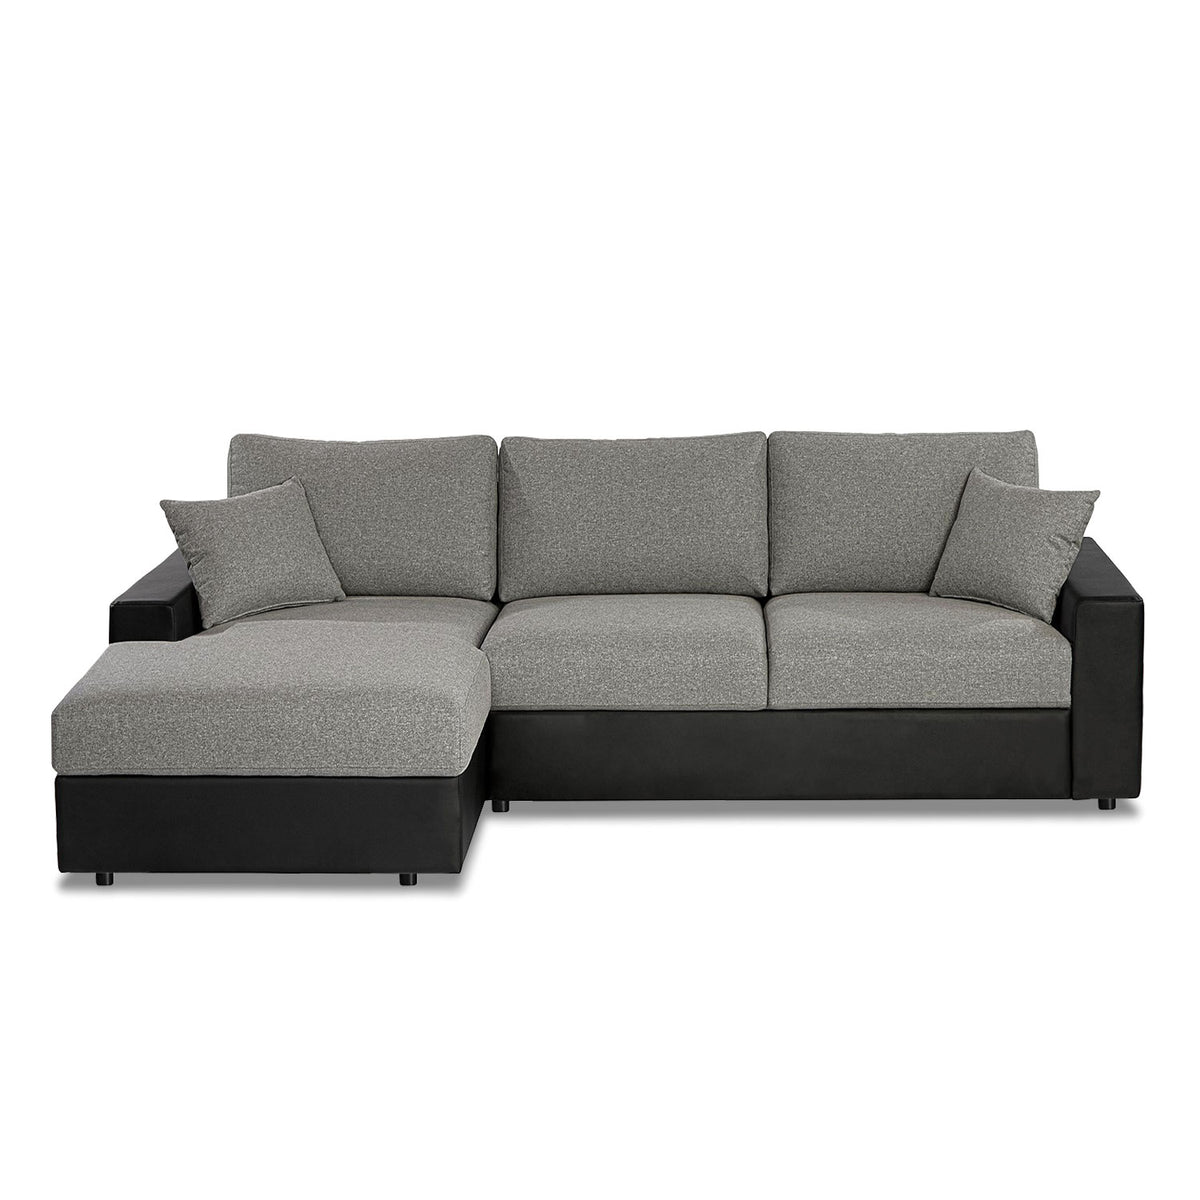 Mason Lounger Sofa